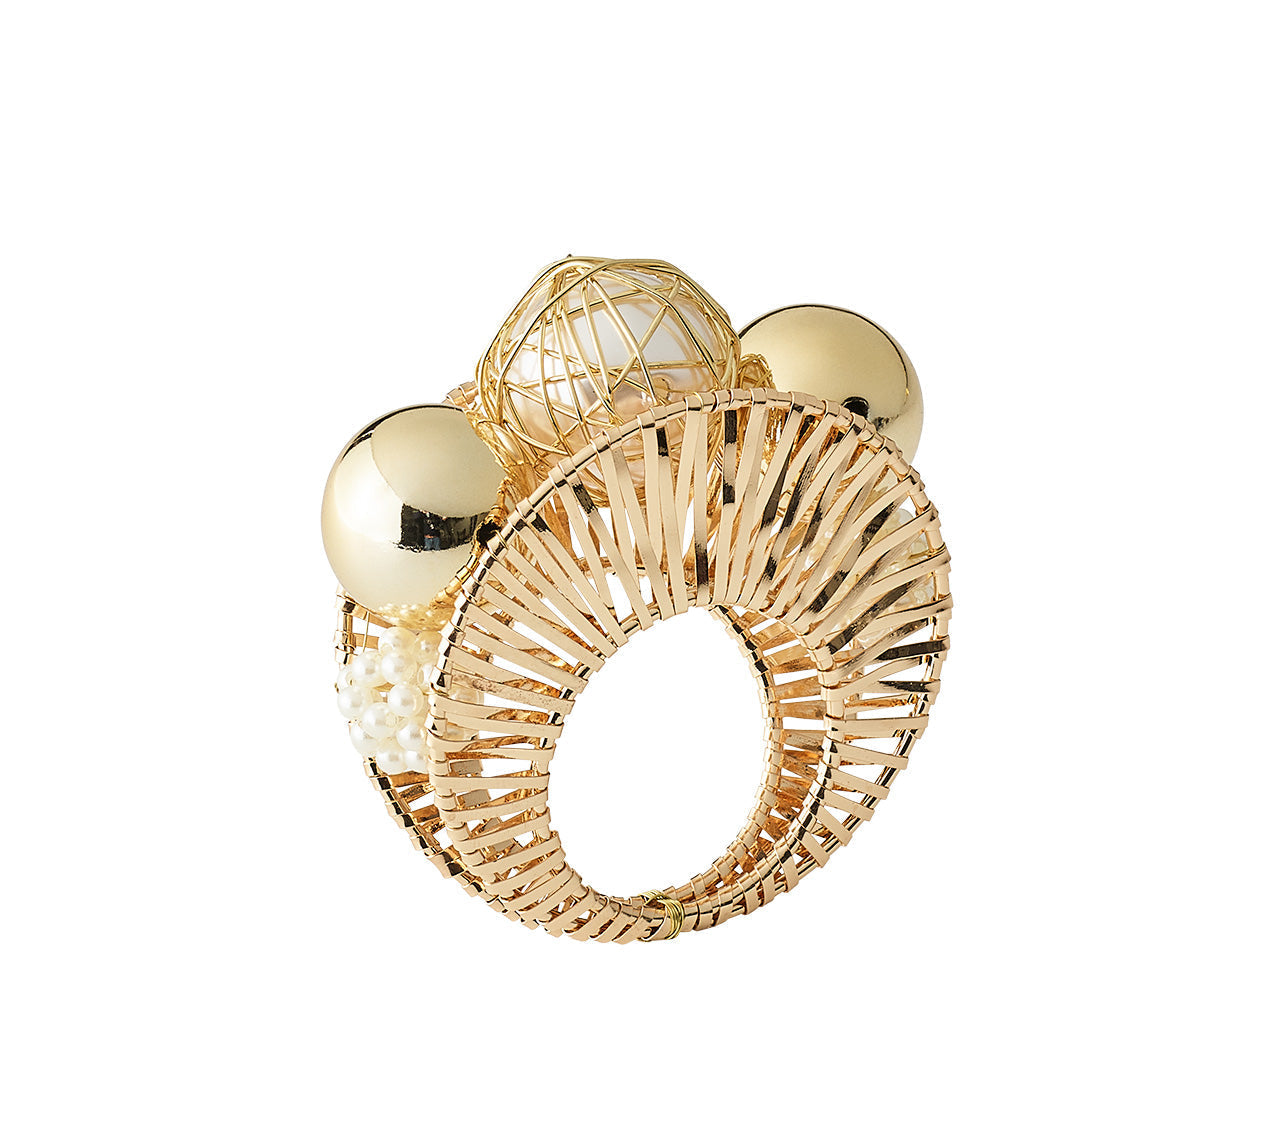 Regent Napkin Ring in Ivory & Gold